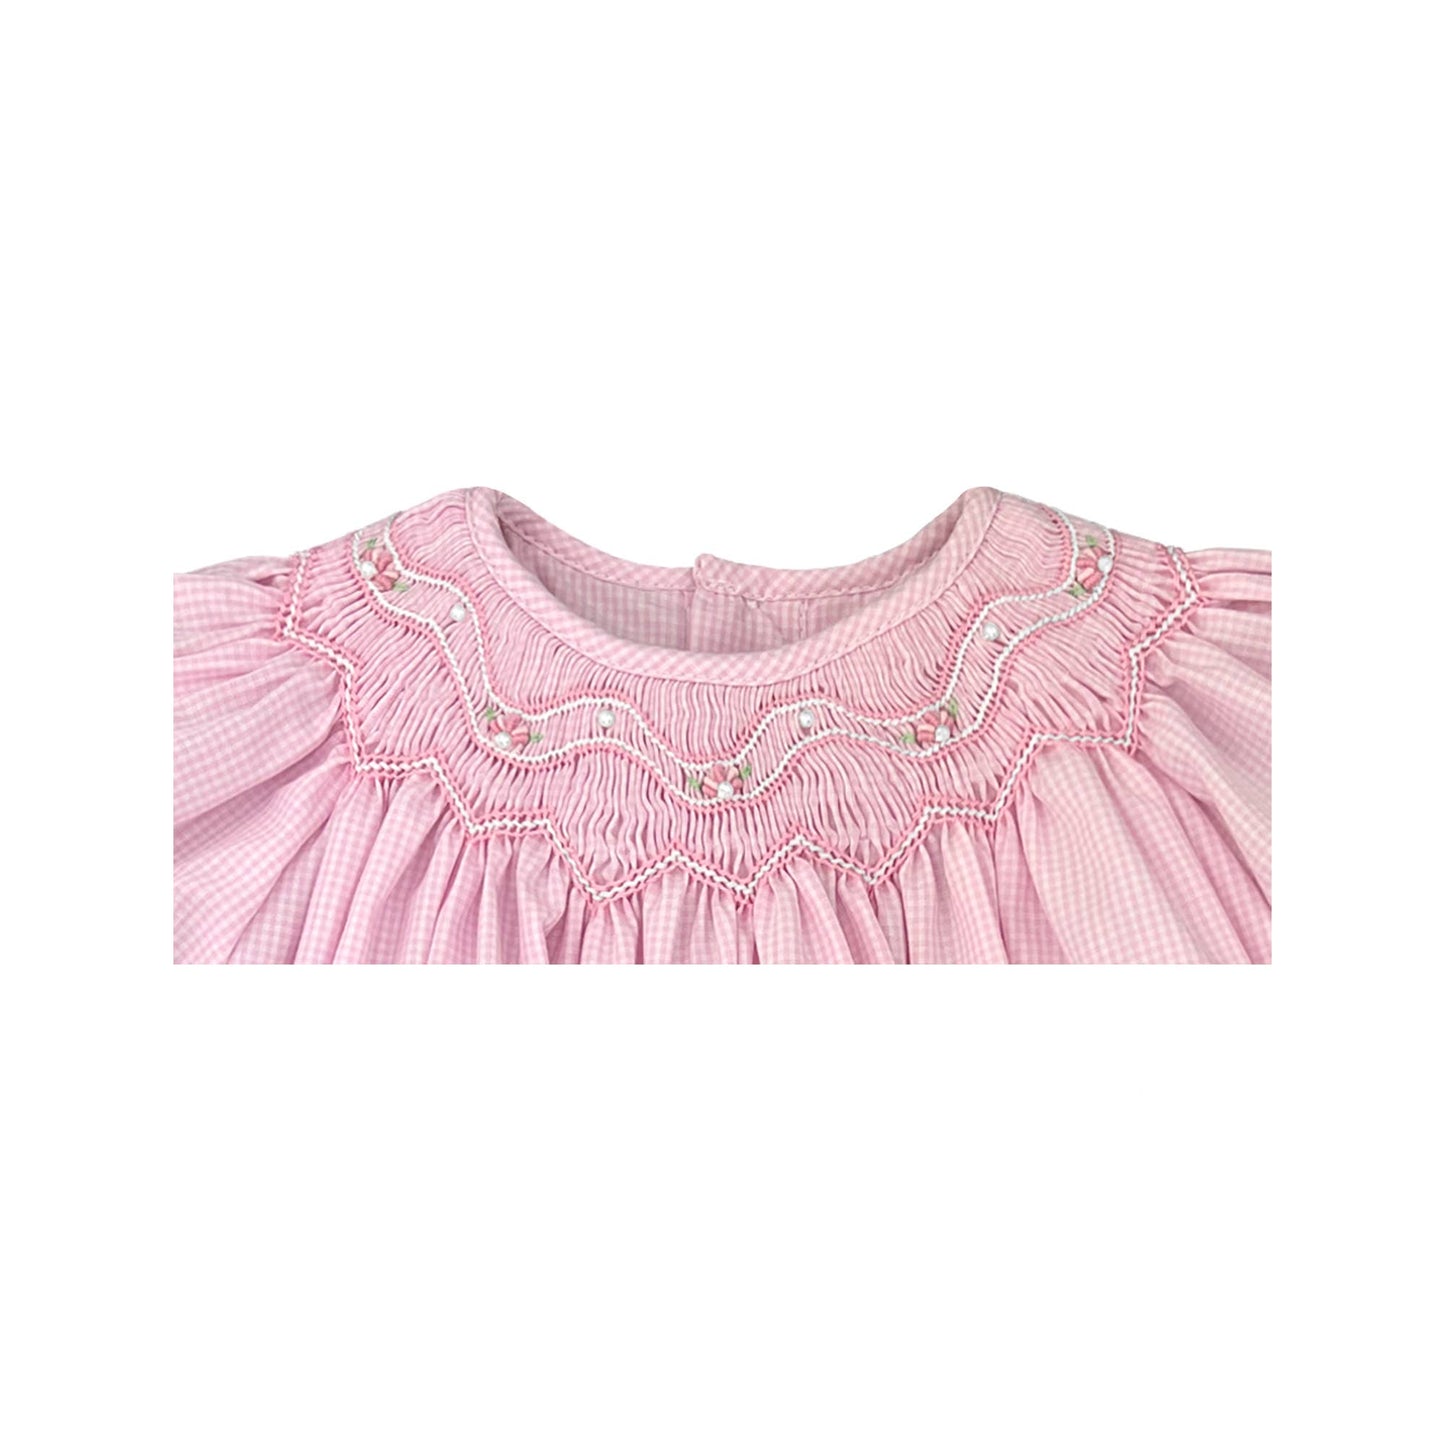 Ivie Dress in Pink- Infant Girls (3M-12M)